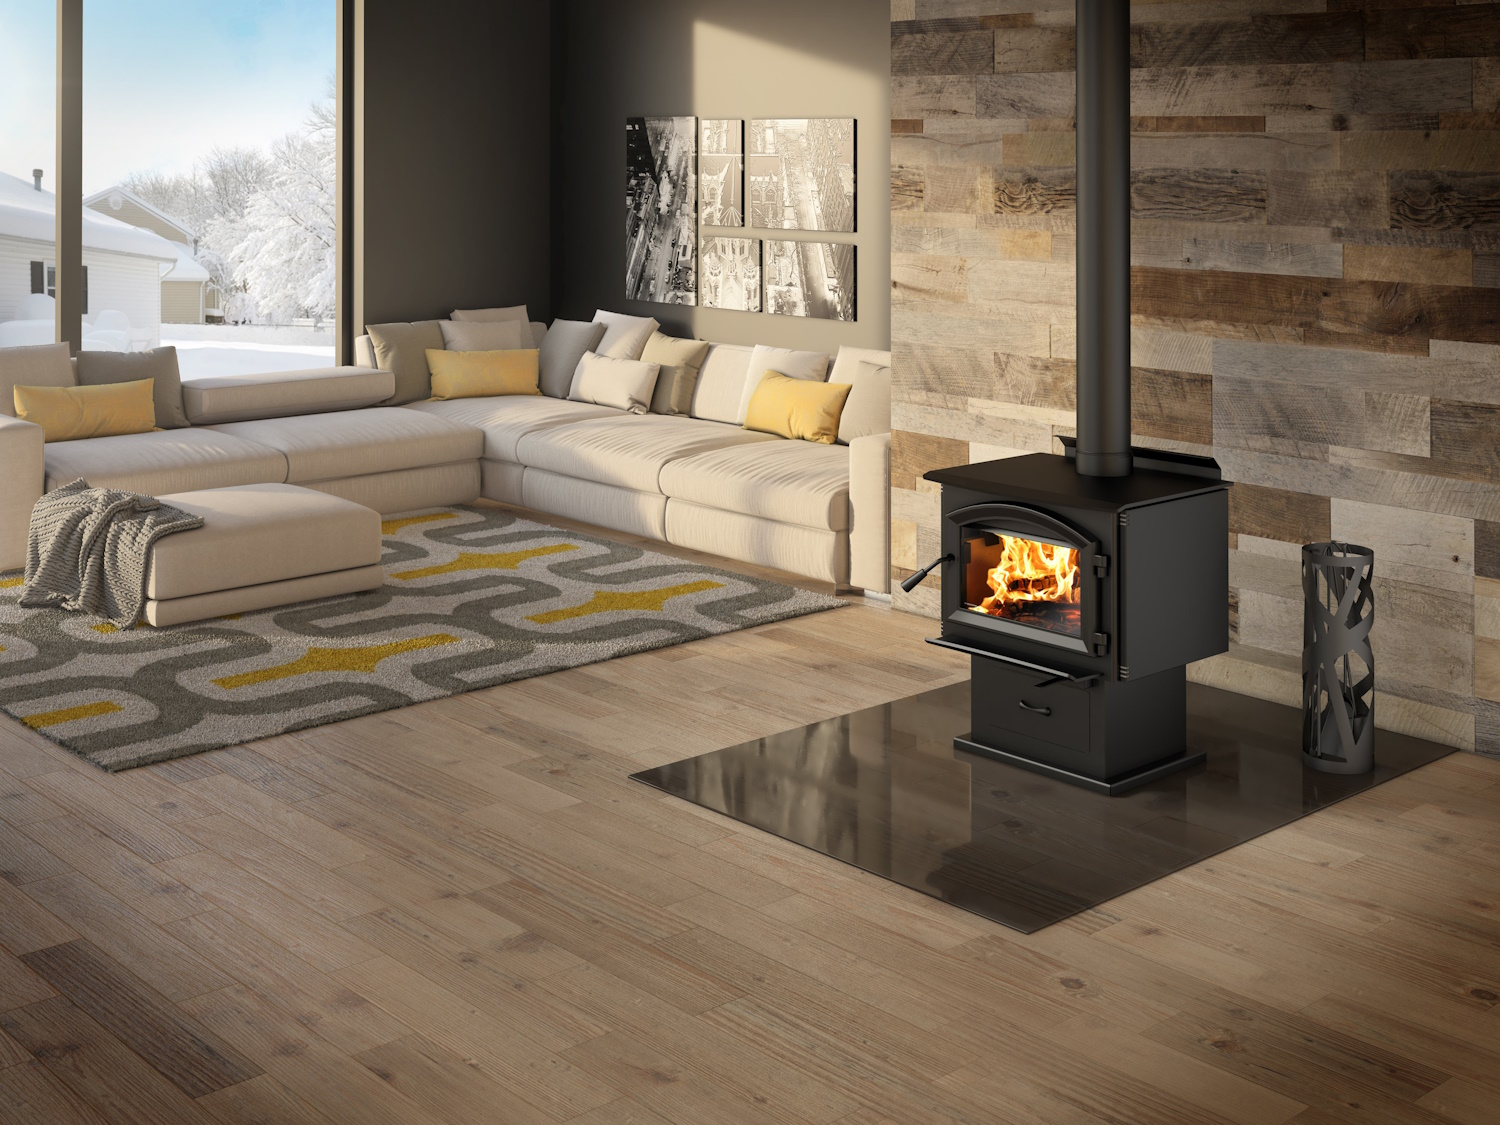 Image Enerzone Solution 2.3 wood stove                                                                                                                      